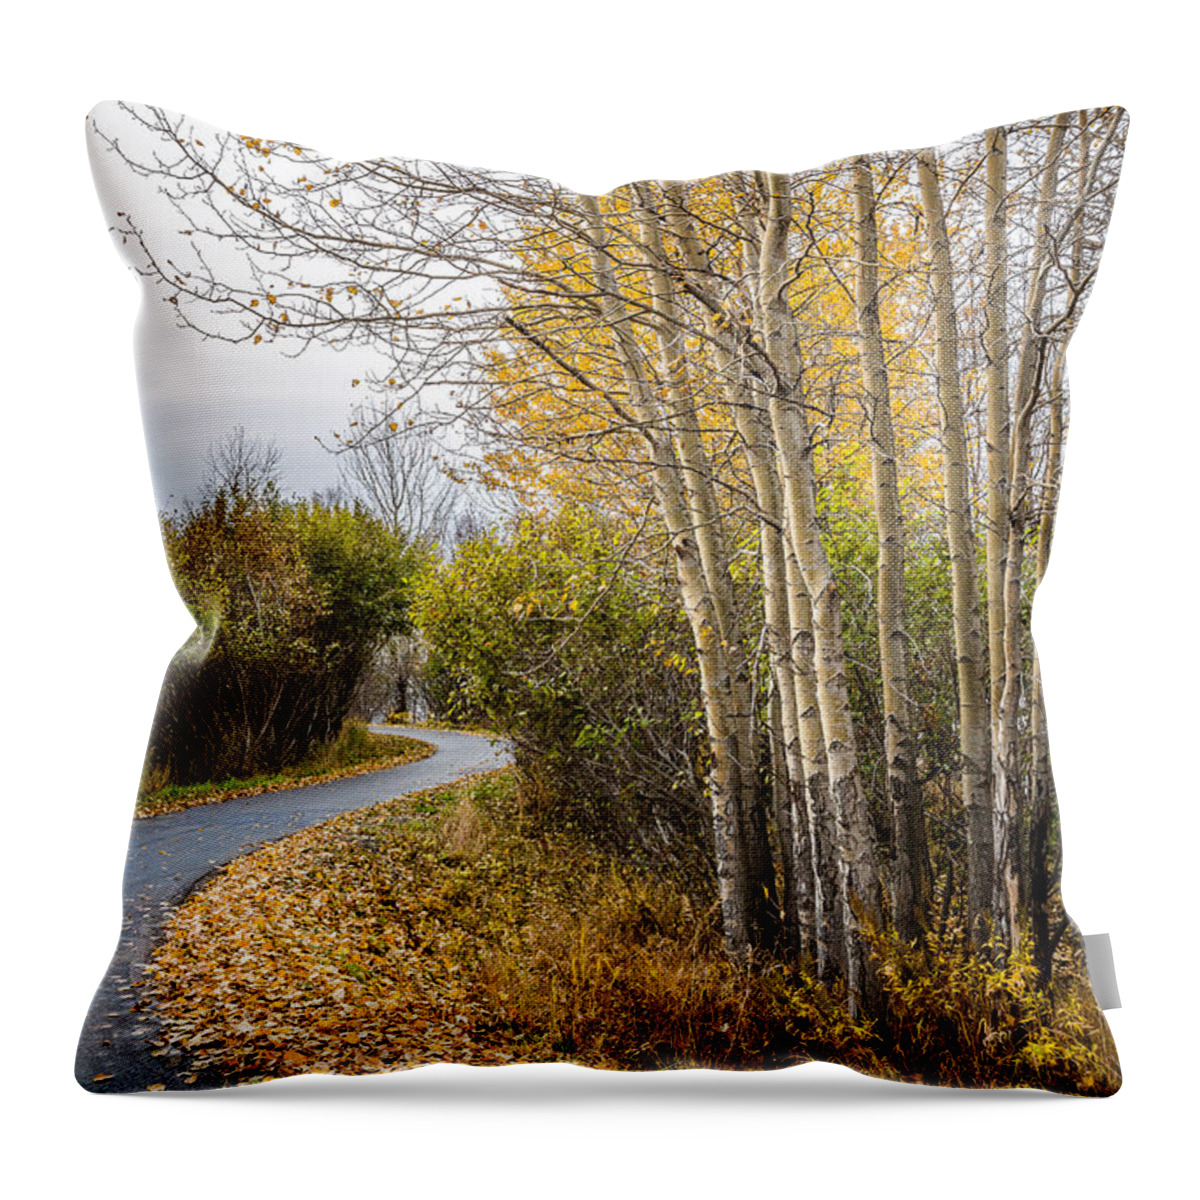 Autumn Throw Pillow featuring the photograph Rainy Autumn Walk by Tim Newton